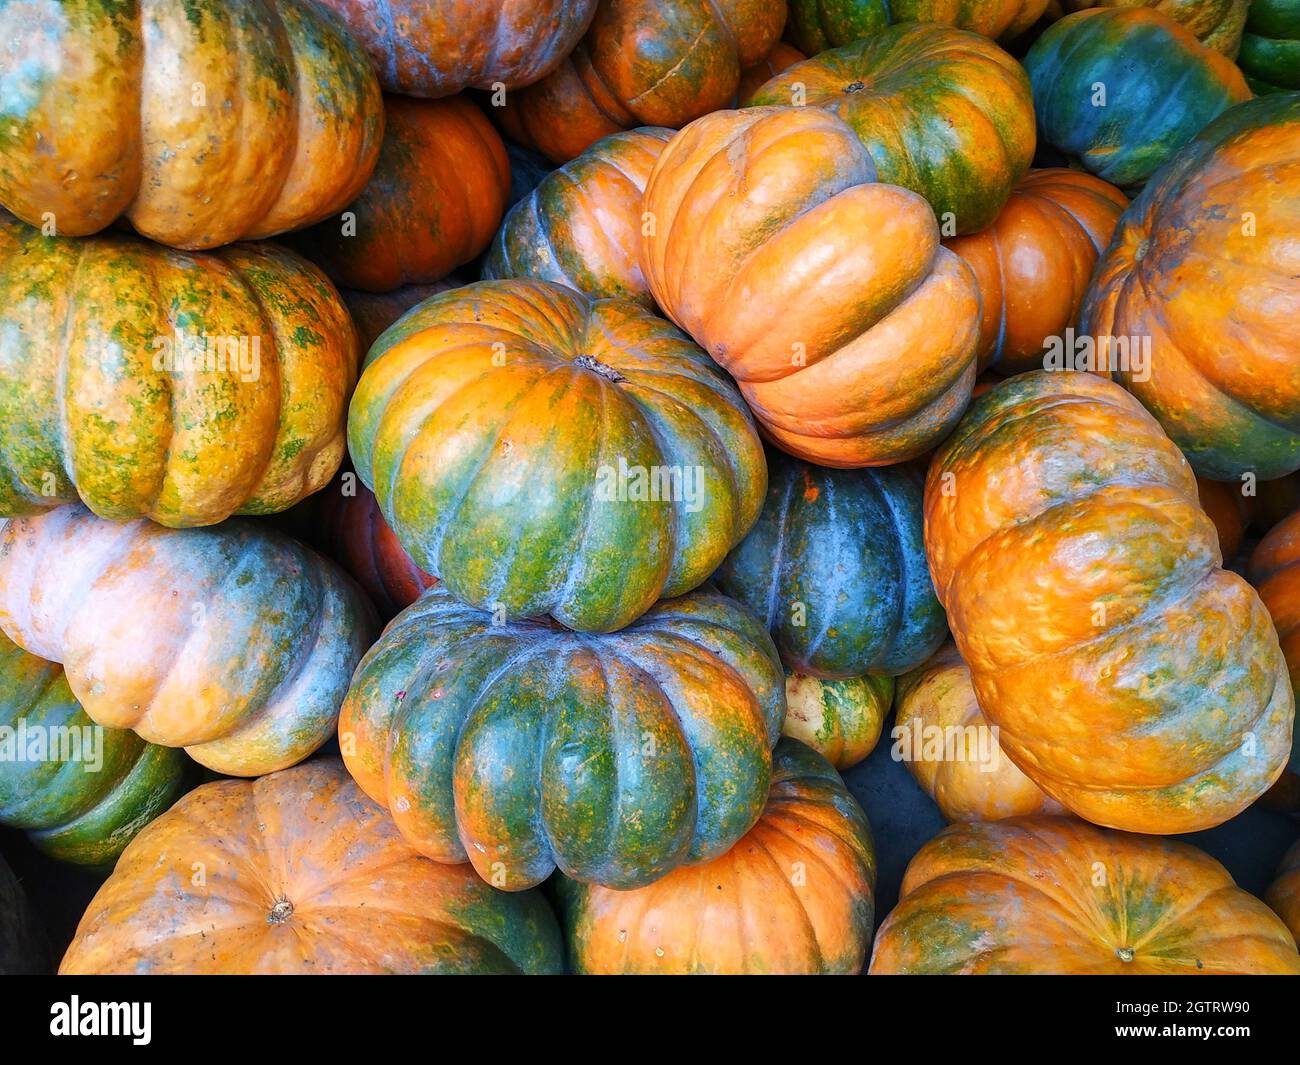 Full Frame Shot Of Pumpkins At Market Stall Stock Photo